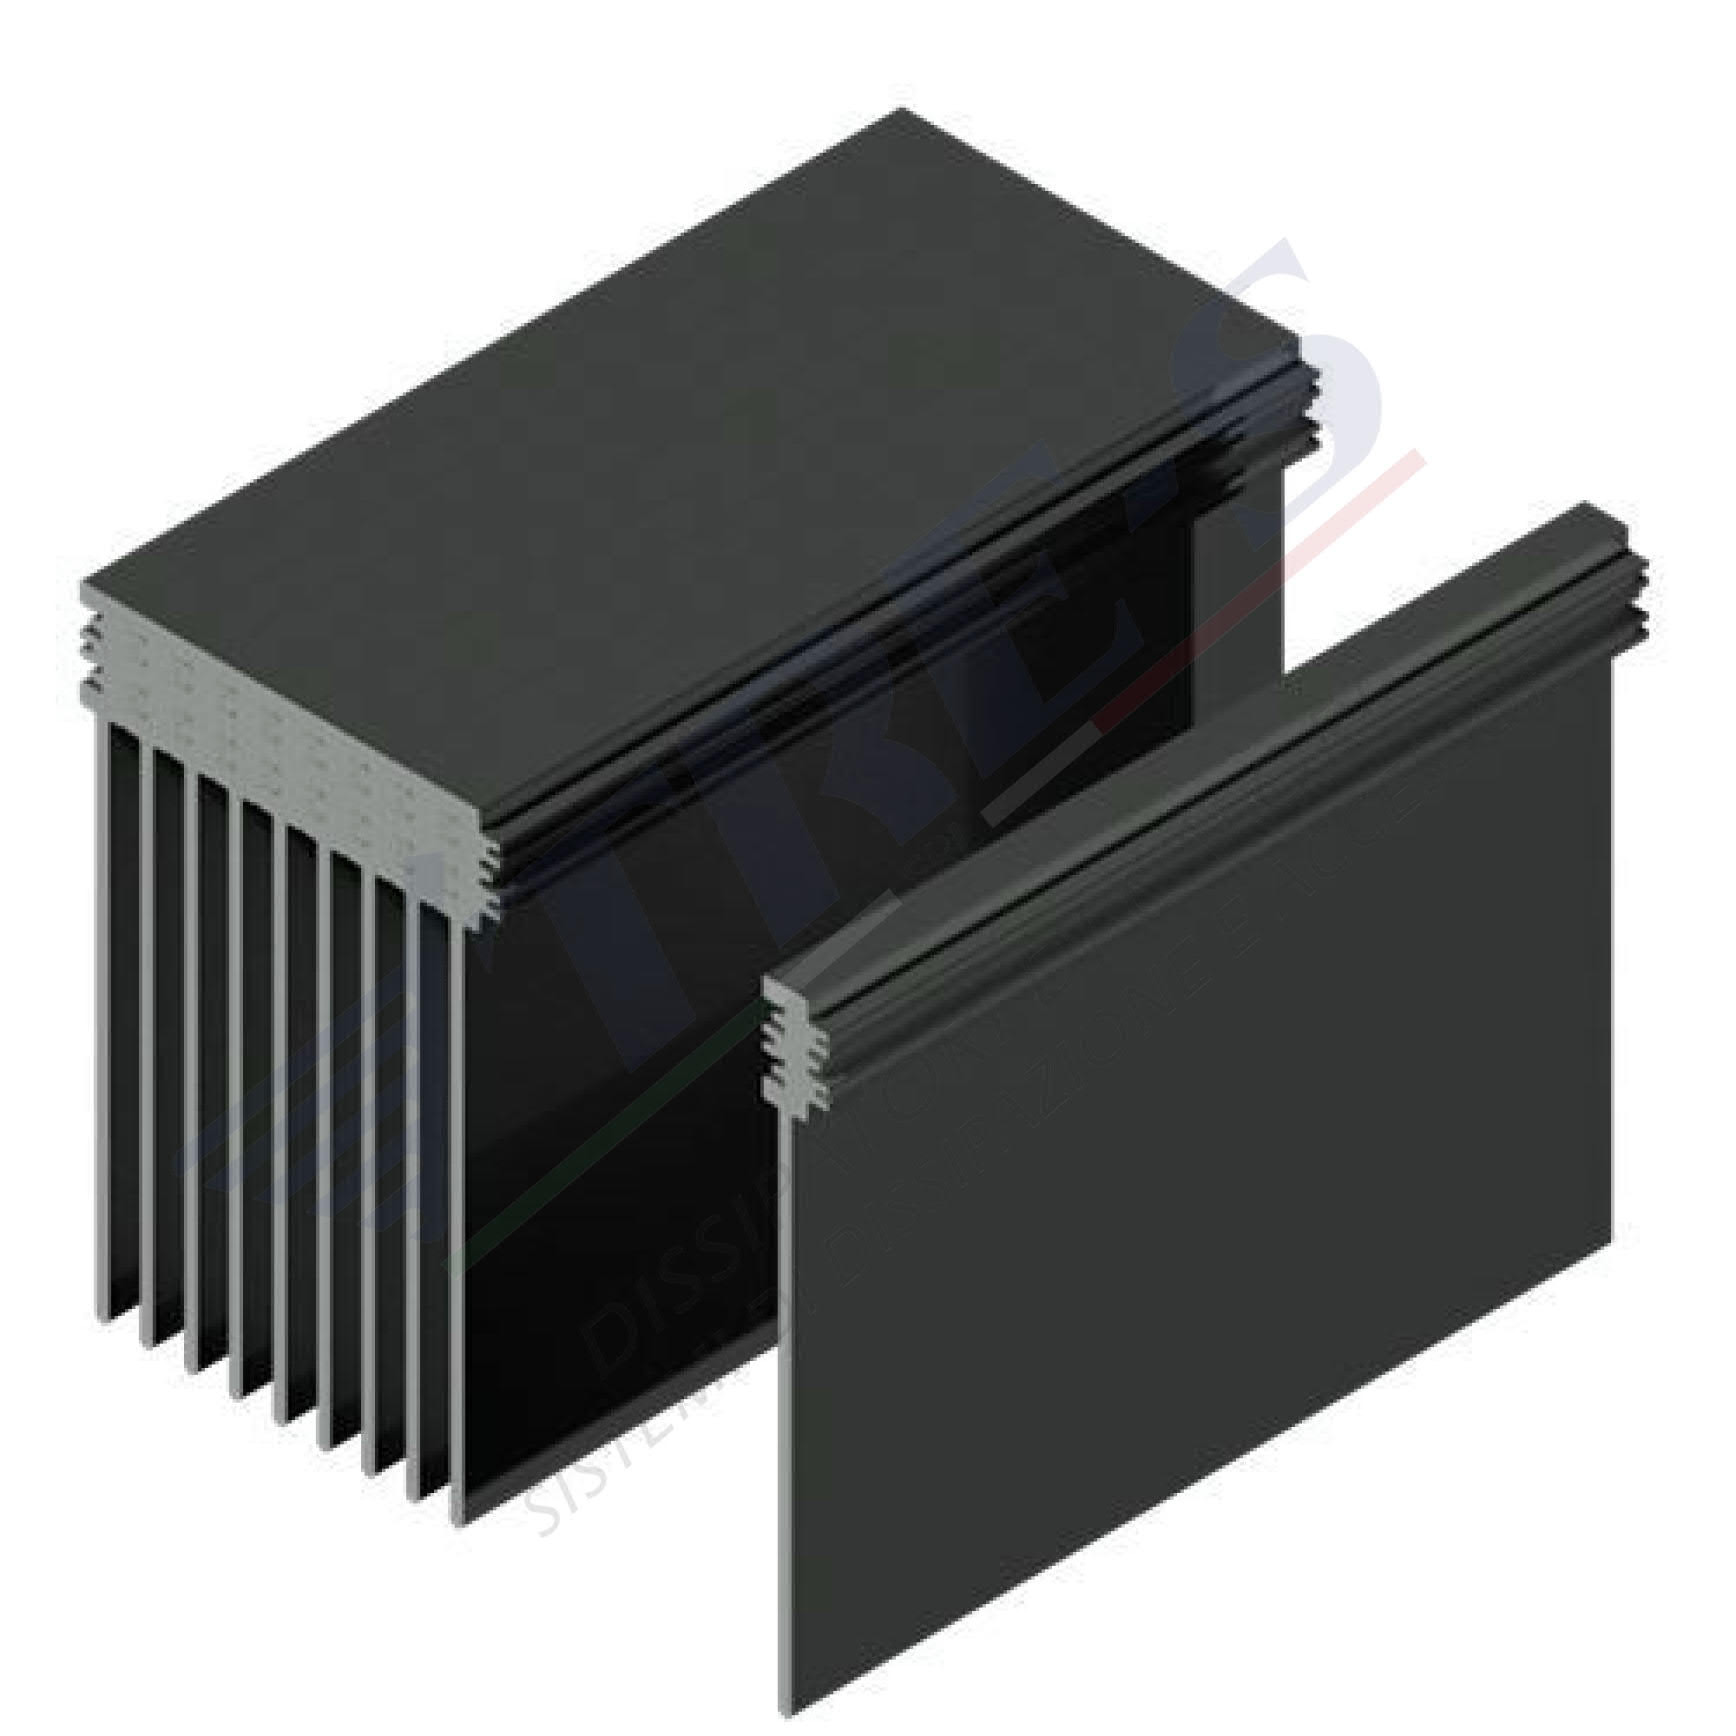 PRI1035 - Embedded heat sinks